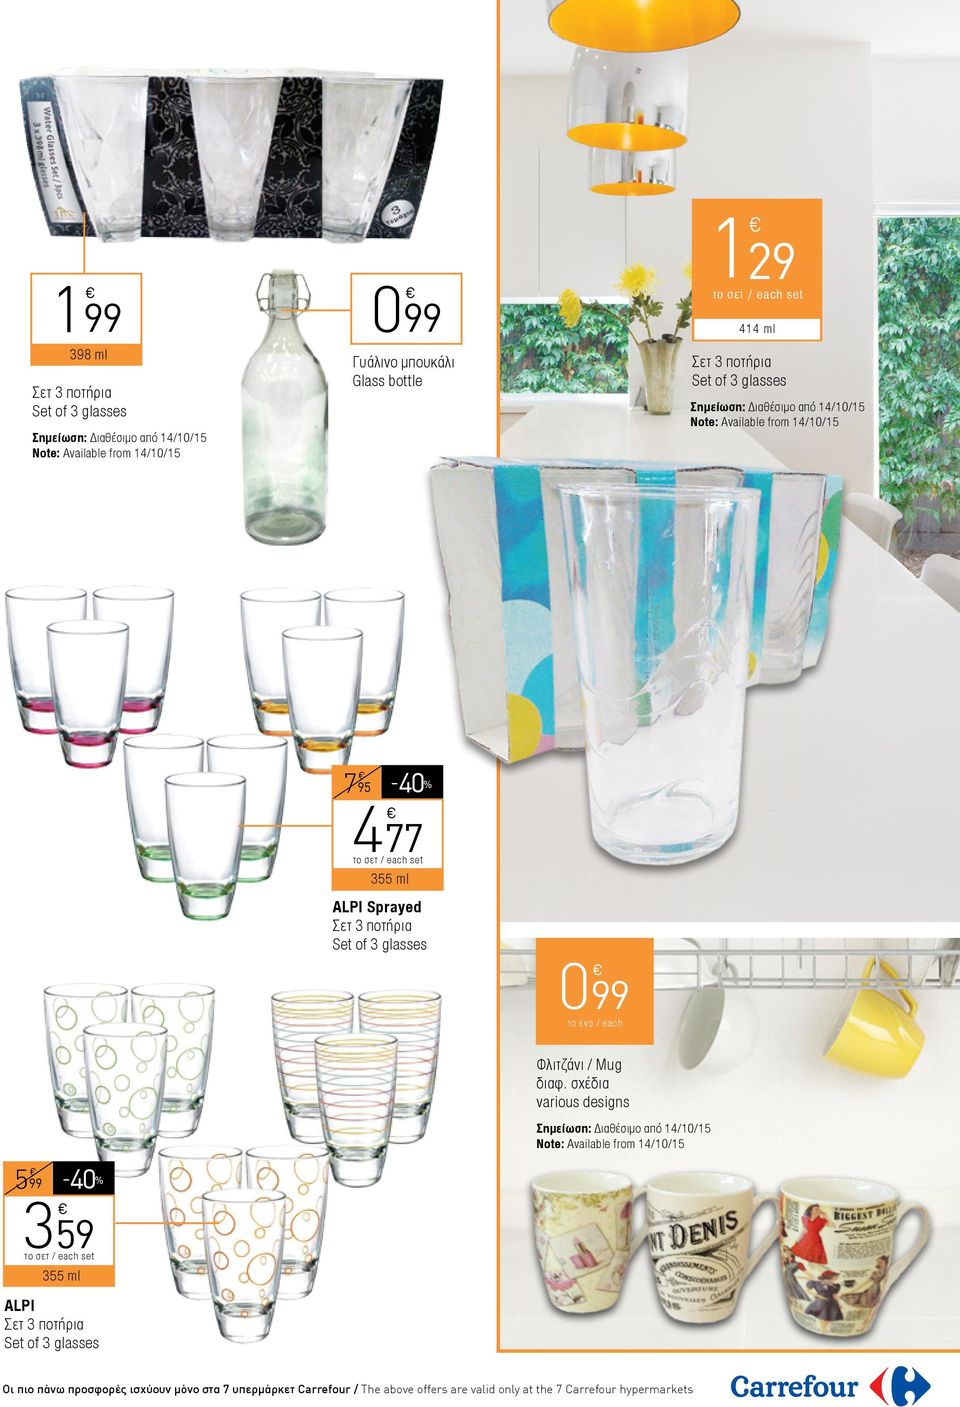 Note: Available from 14/10/15 795 4 77 355 ml ALPI Sprayed Σετ 3 ποτήρια Set of 3 glasses Φλιτζάνι / Mug